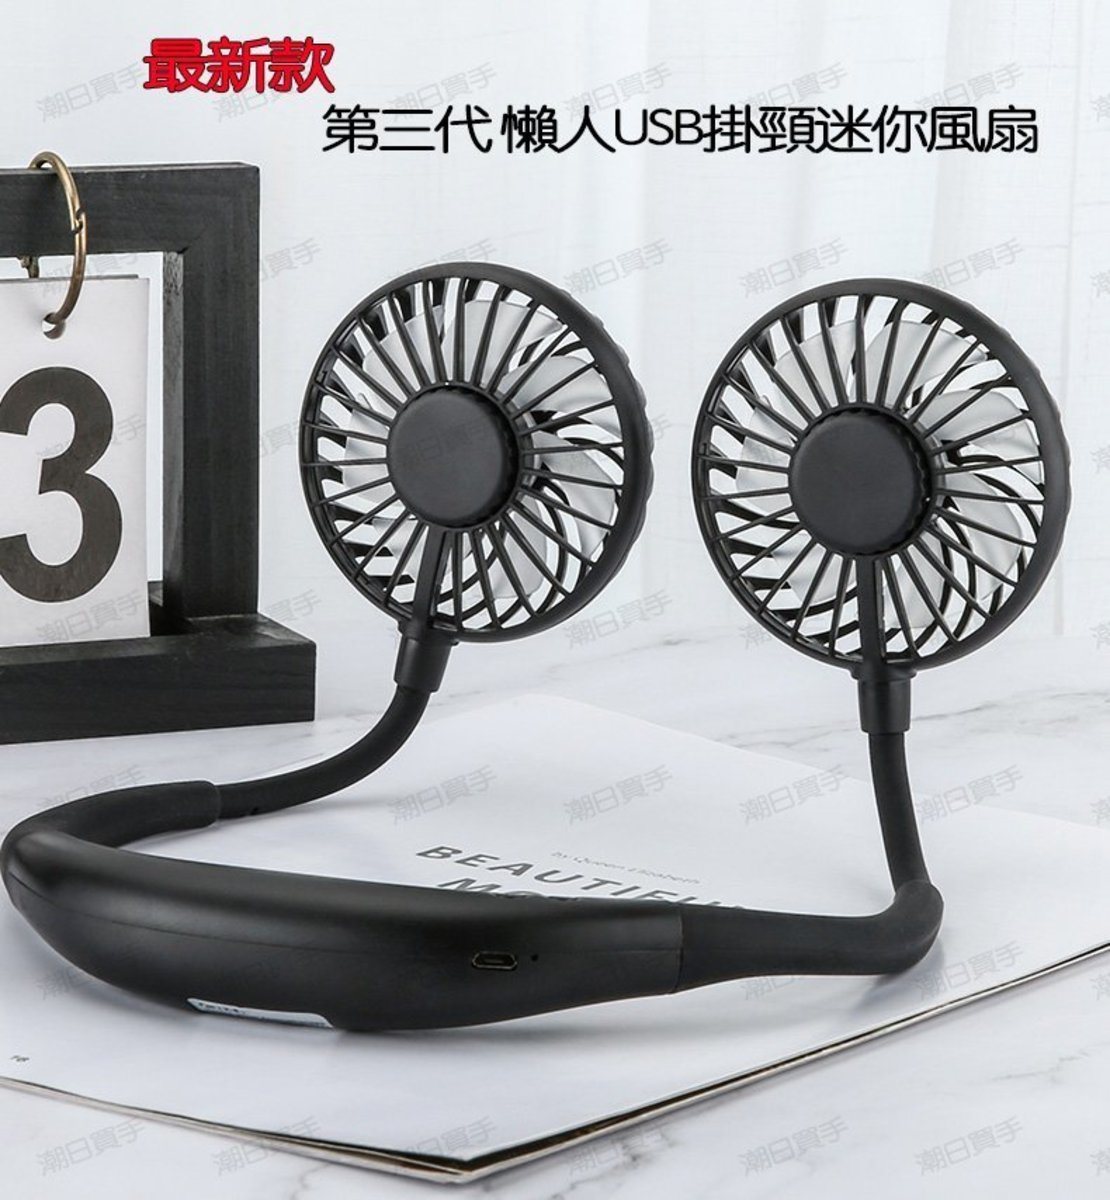 New third generation lazy USB hanging neck fan - Black